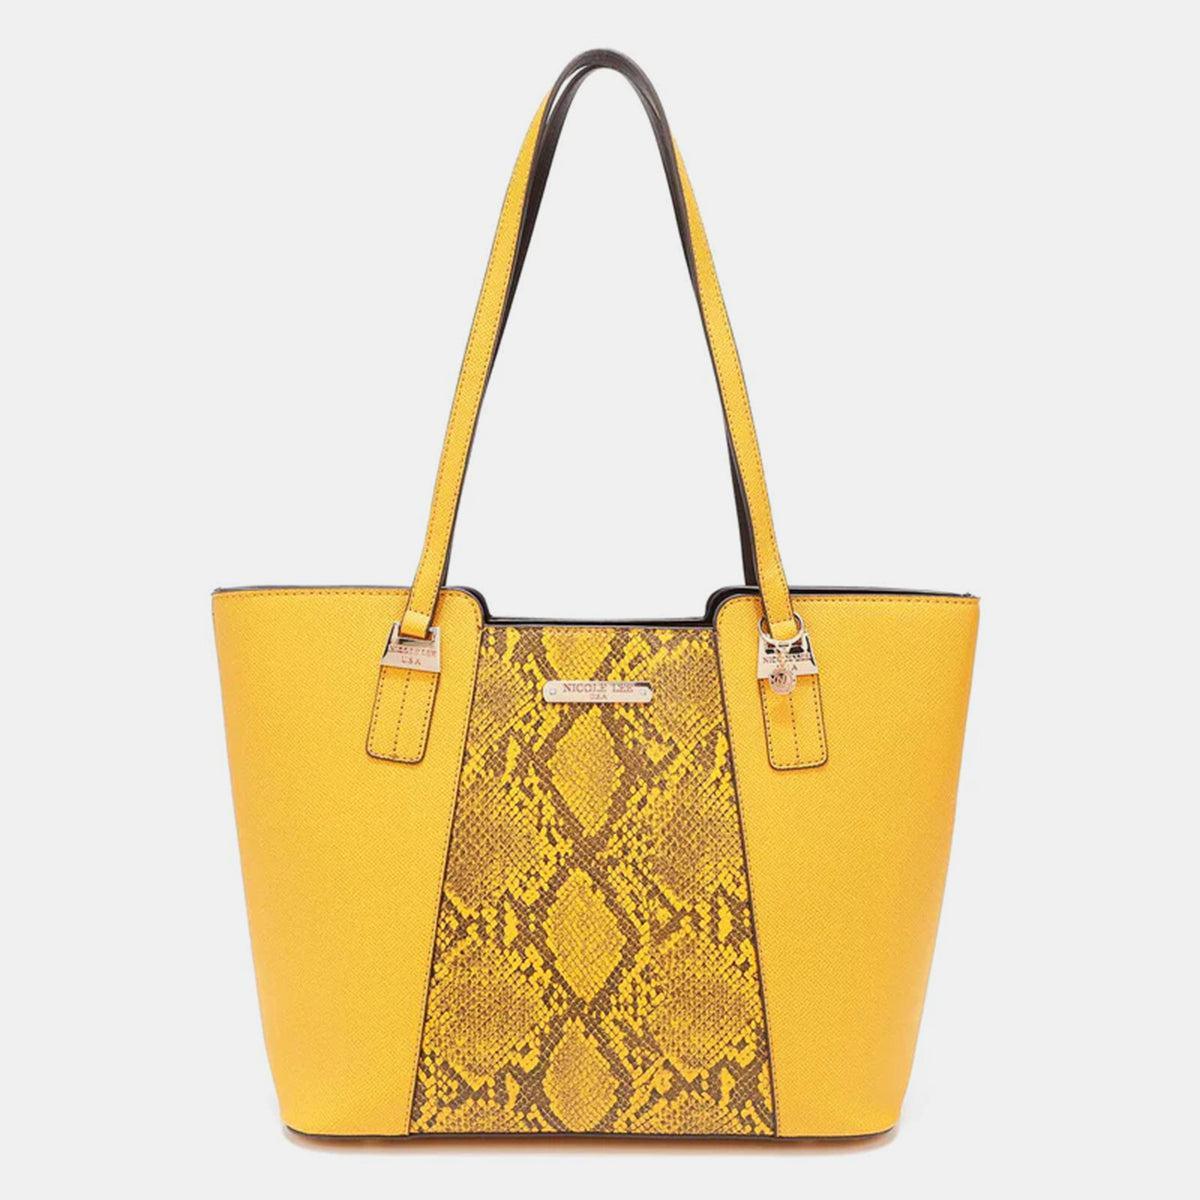 a yellow handbag with a snake skin pattern